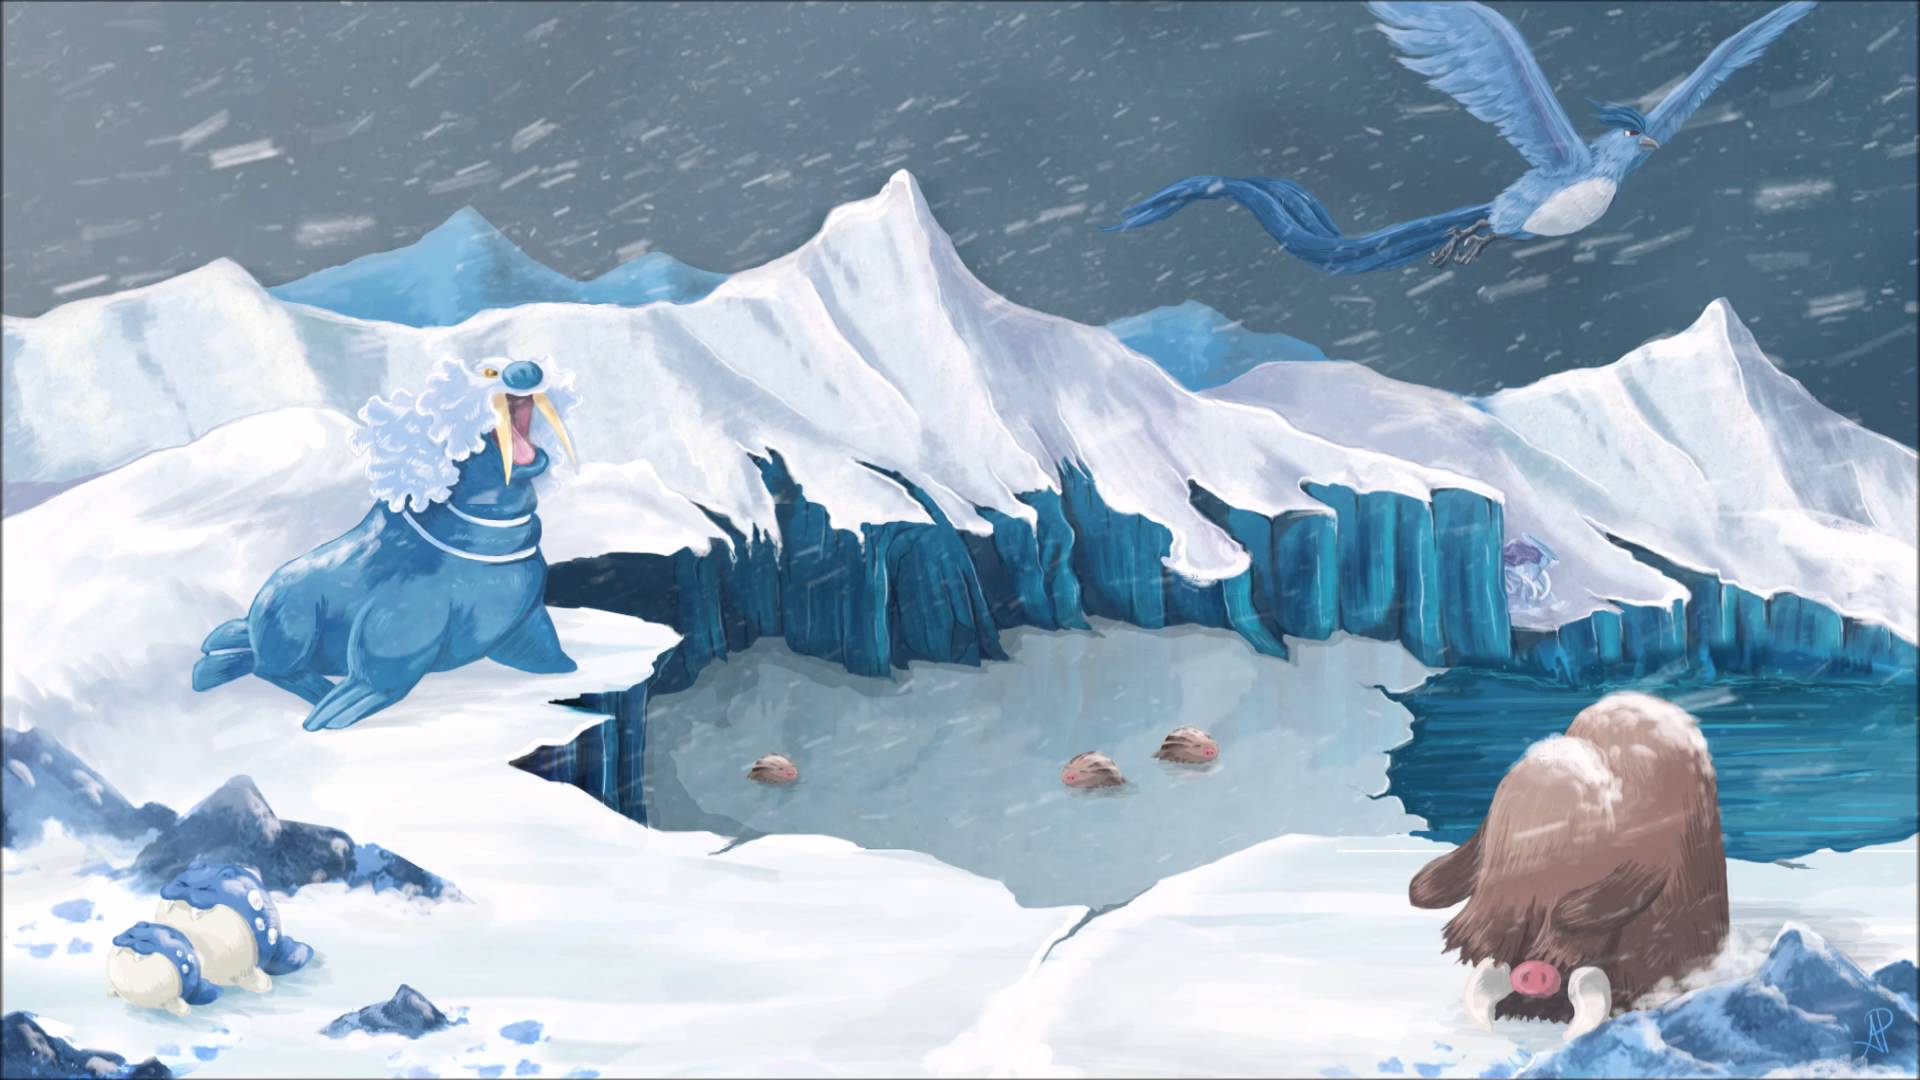 Pixelmon OST - The Frozen Land - YouTube